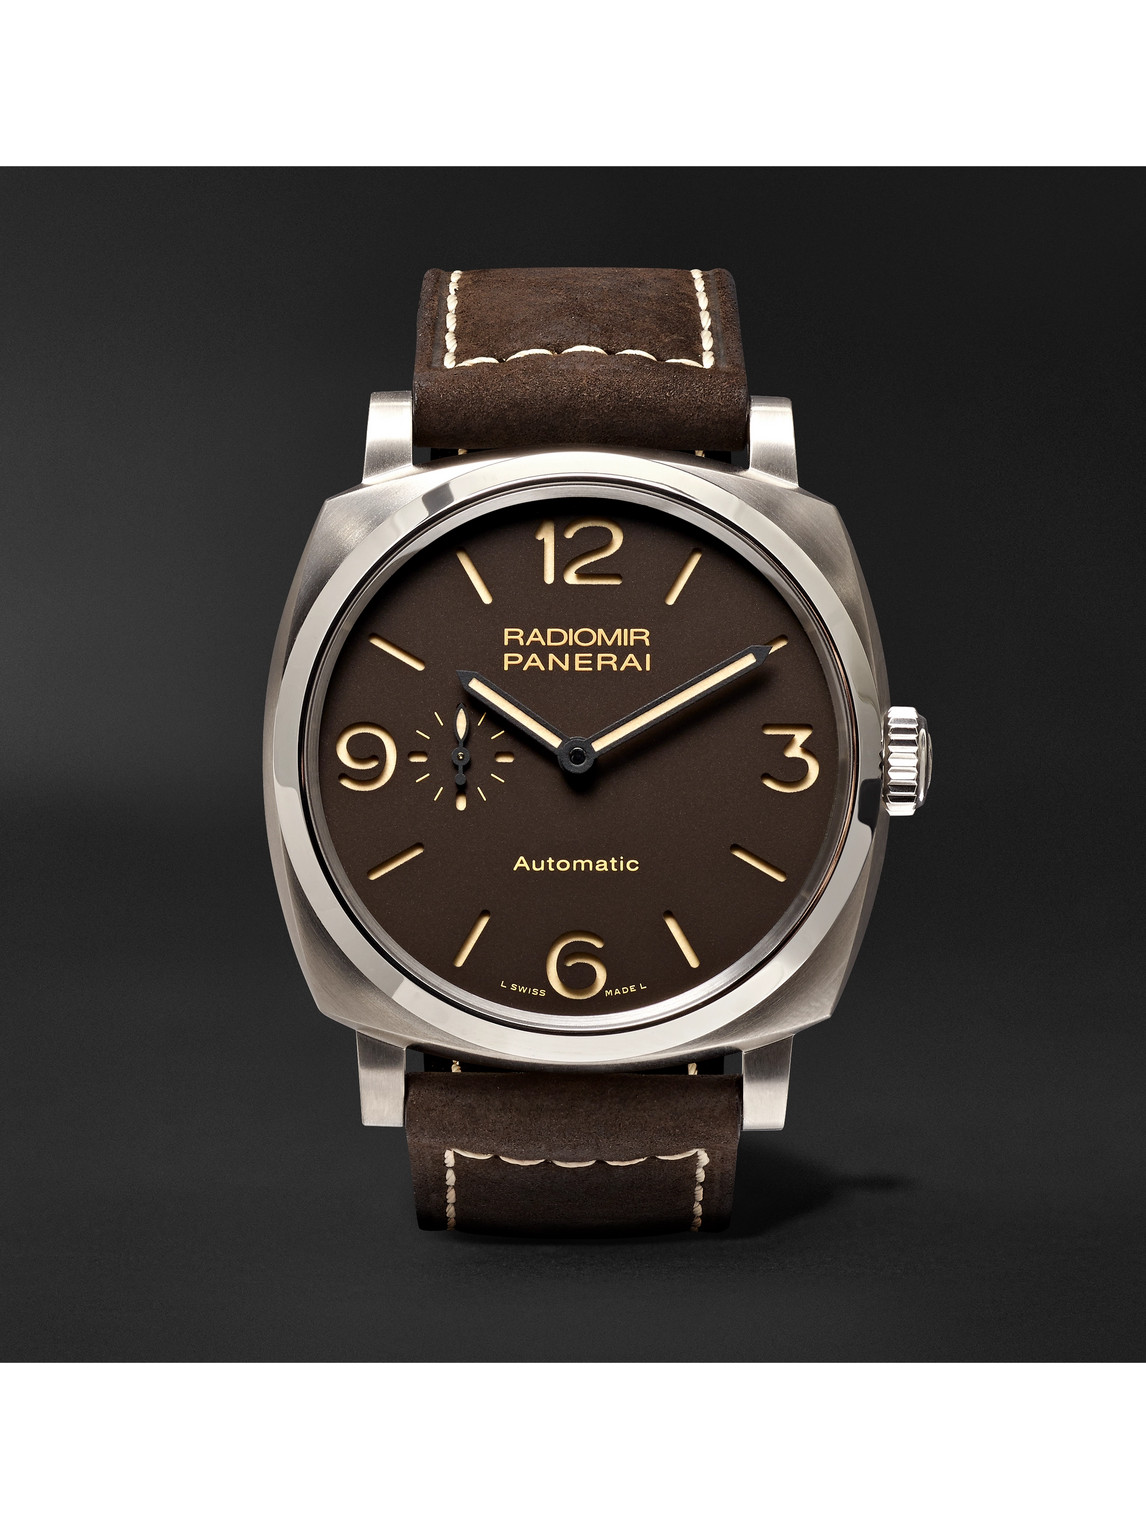 Panerai Radiomir 1940 3 Days Automatic Titanio 45mm Titanium And Leather Watch, Ref. No. Pam00619 In Brown